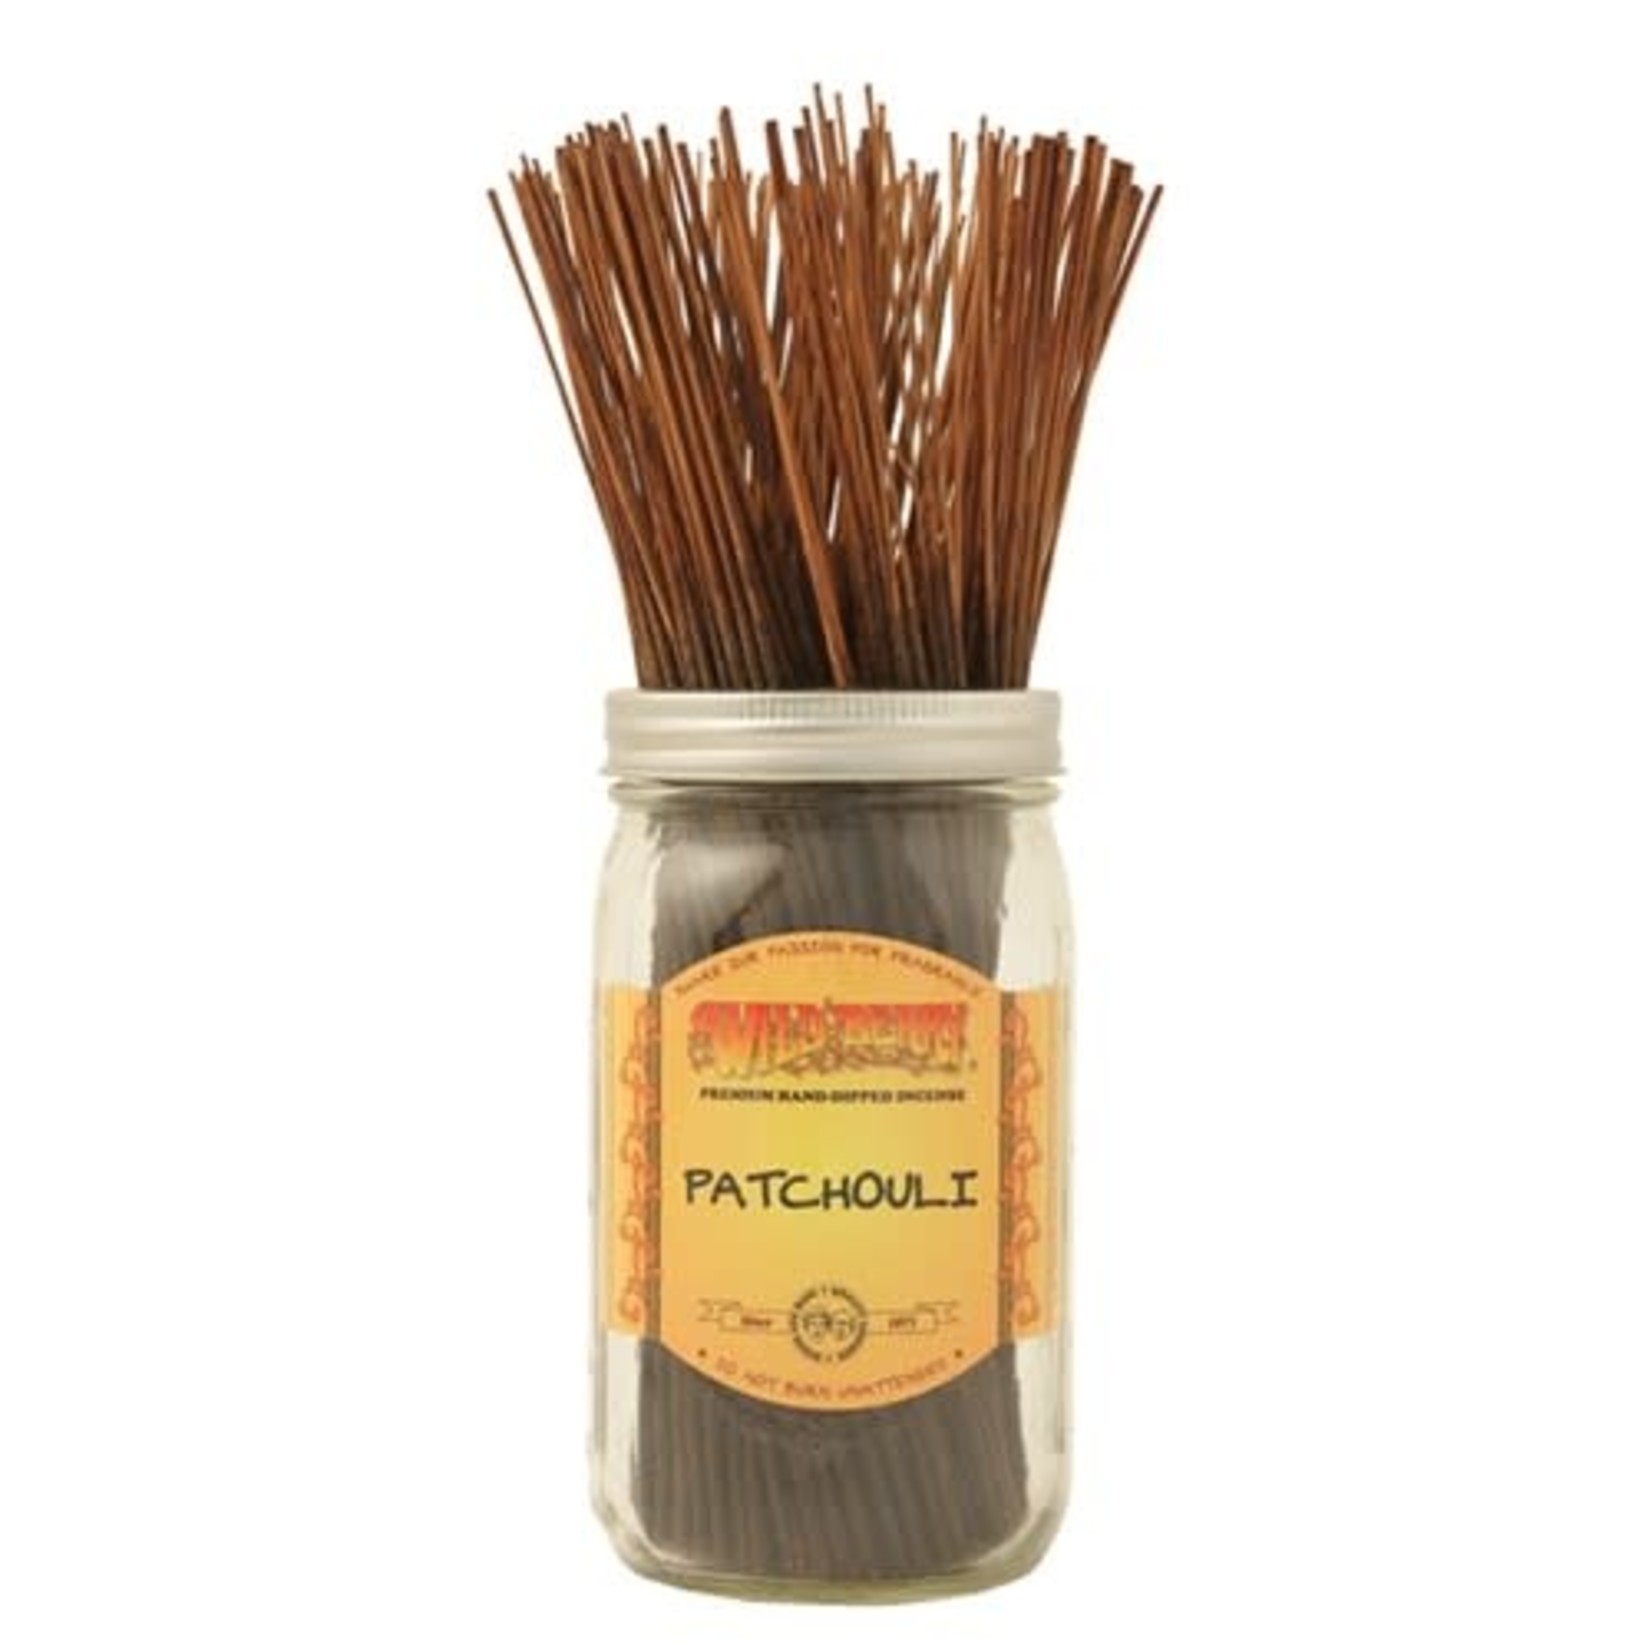 WILD-BERRY Patchouli Incense Sticks (11" long)